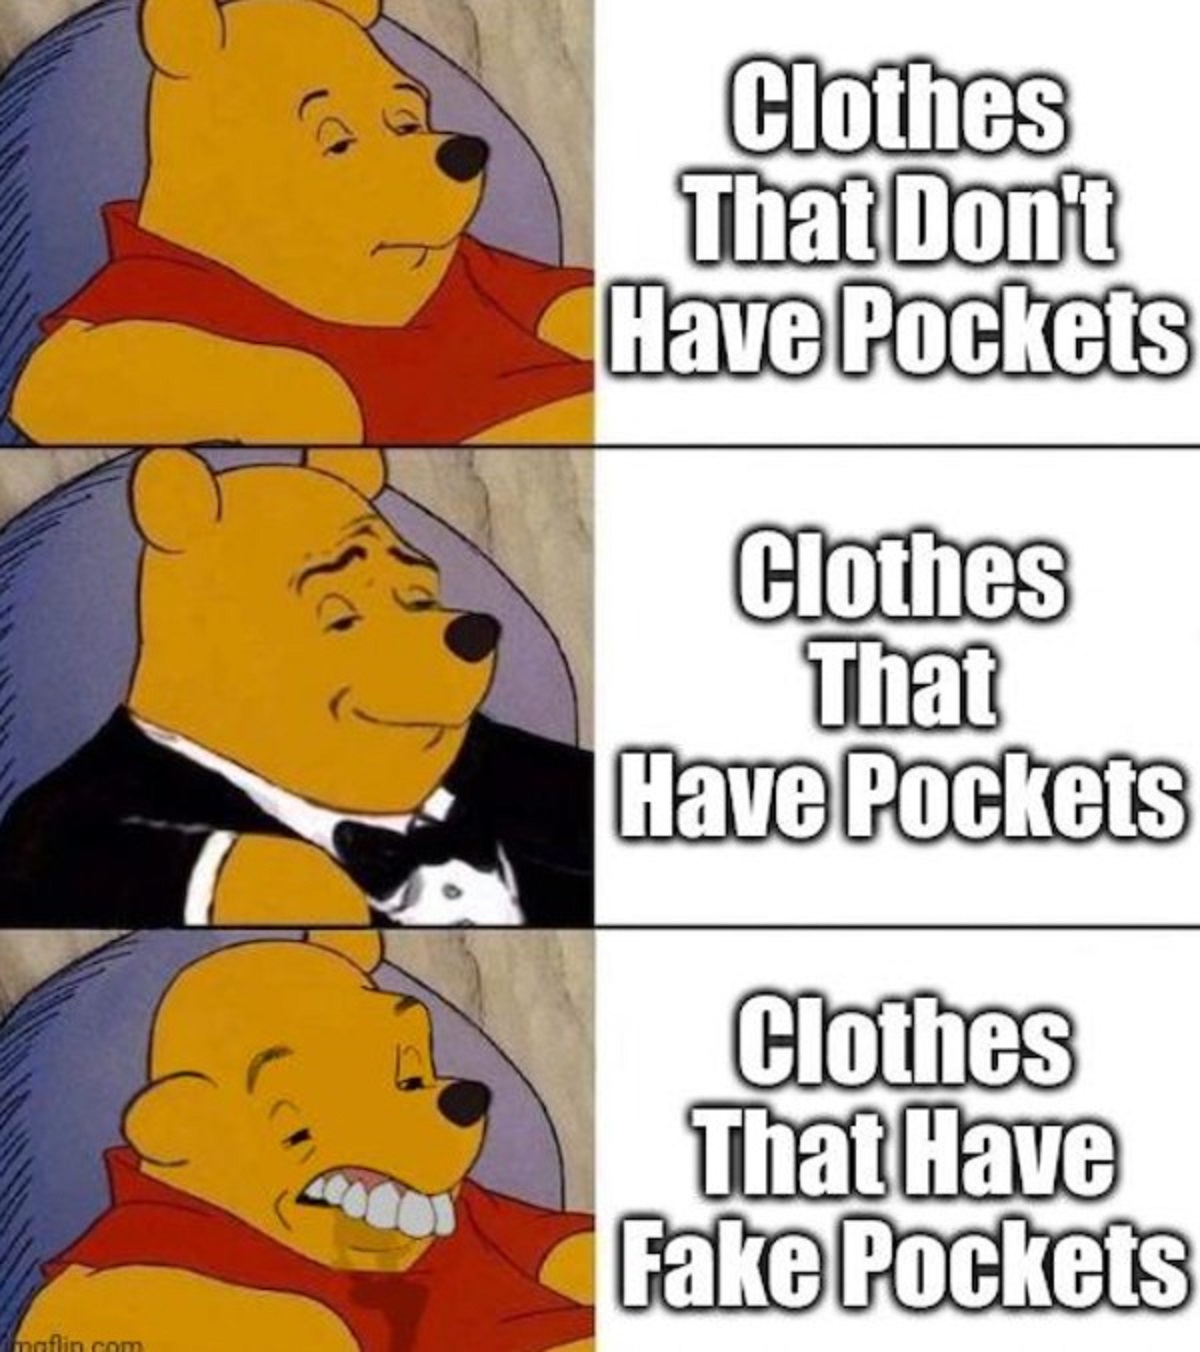 cartoon - maflin.com Clothes That Don't Have Pockets Clothes That Have Pockets Clothes That Have Fake Pockets